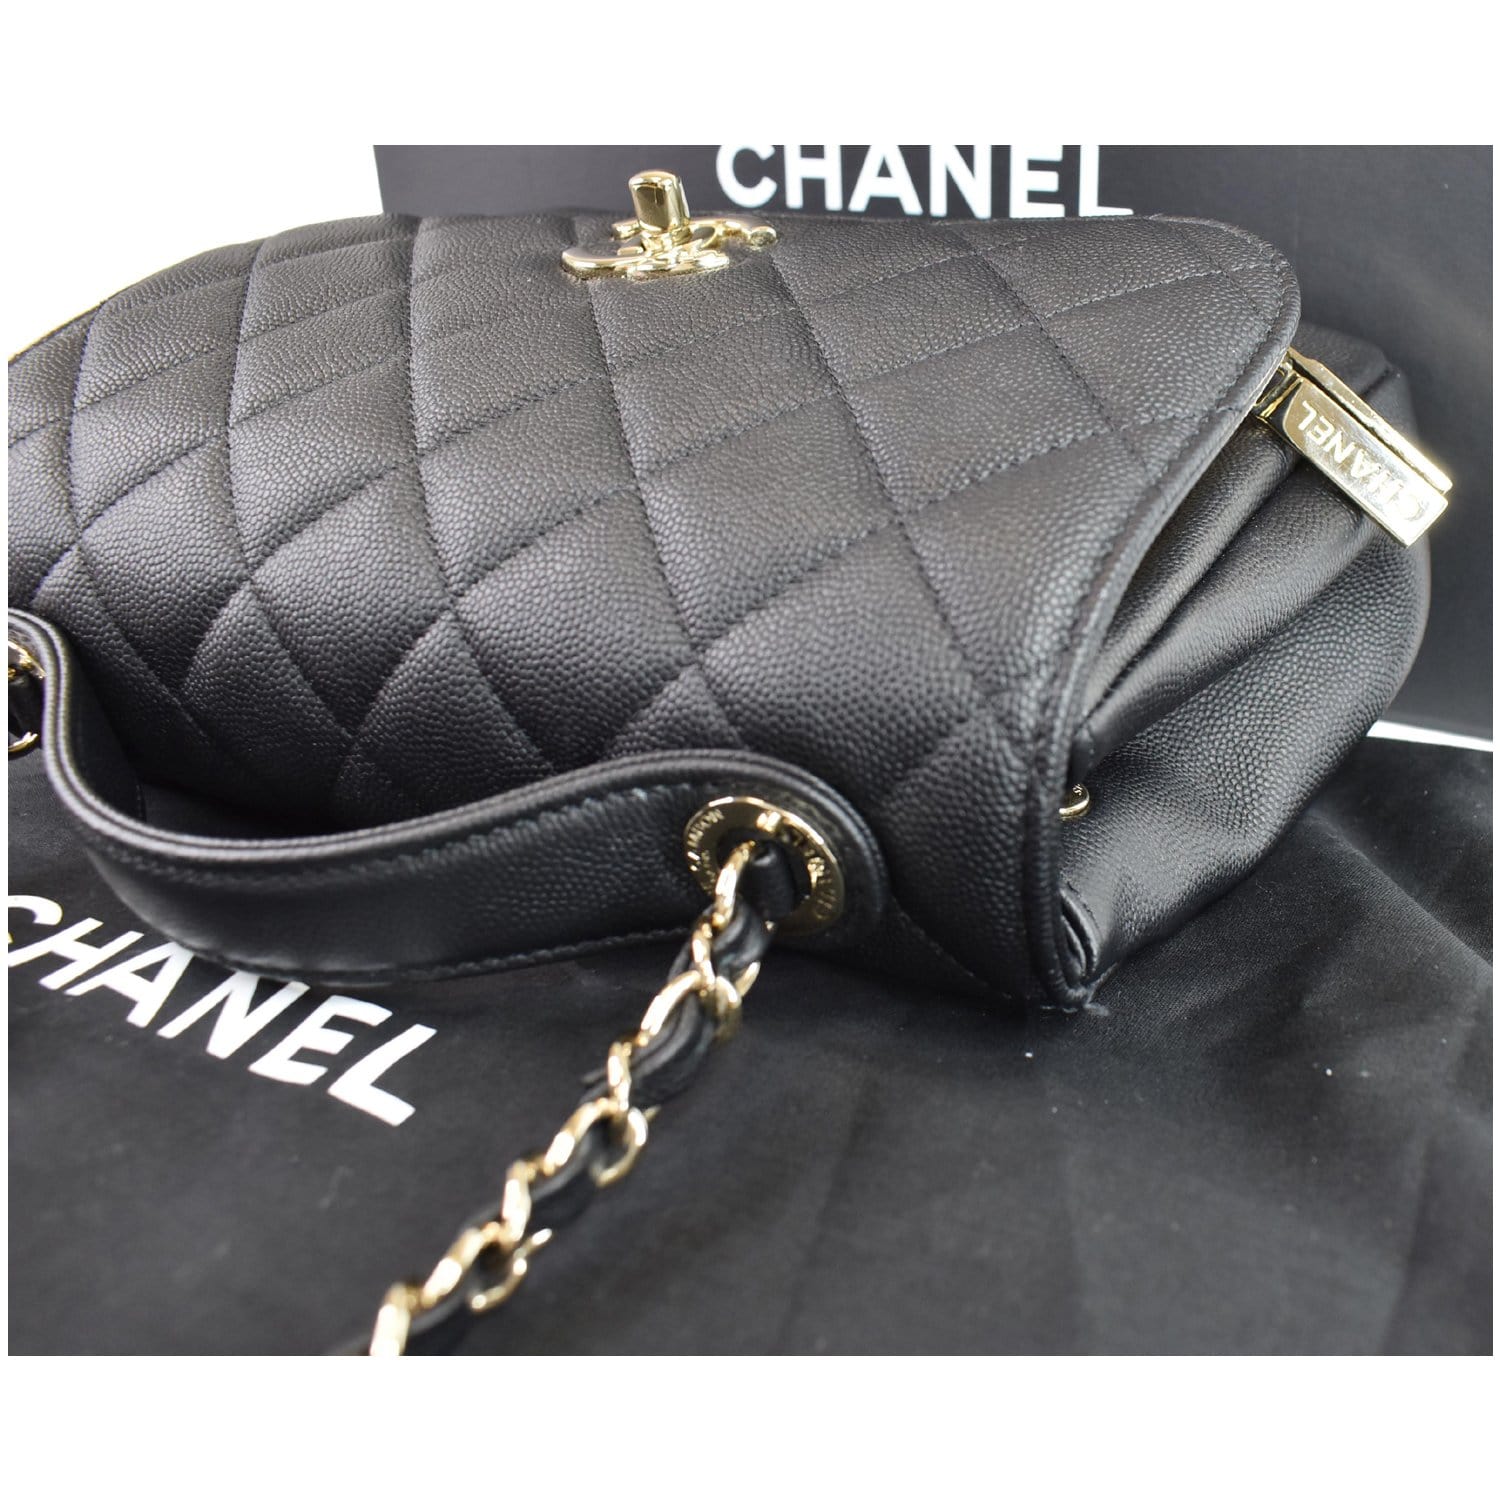 Chanel business affinity suede - Gem